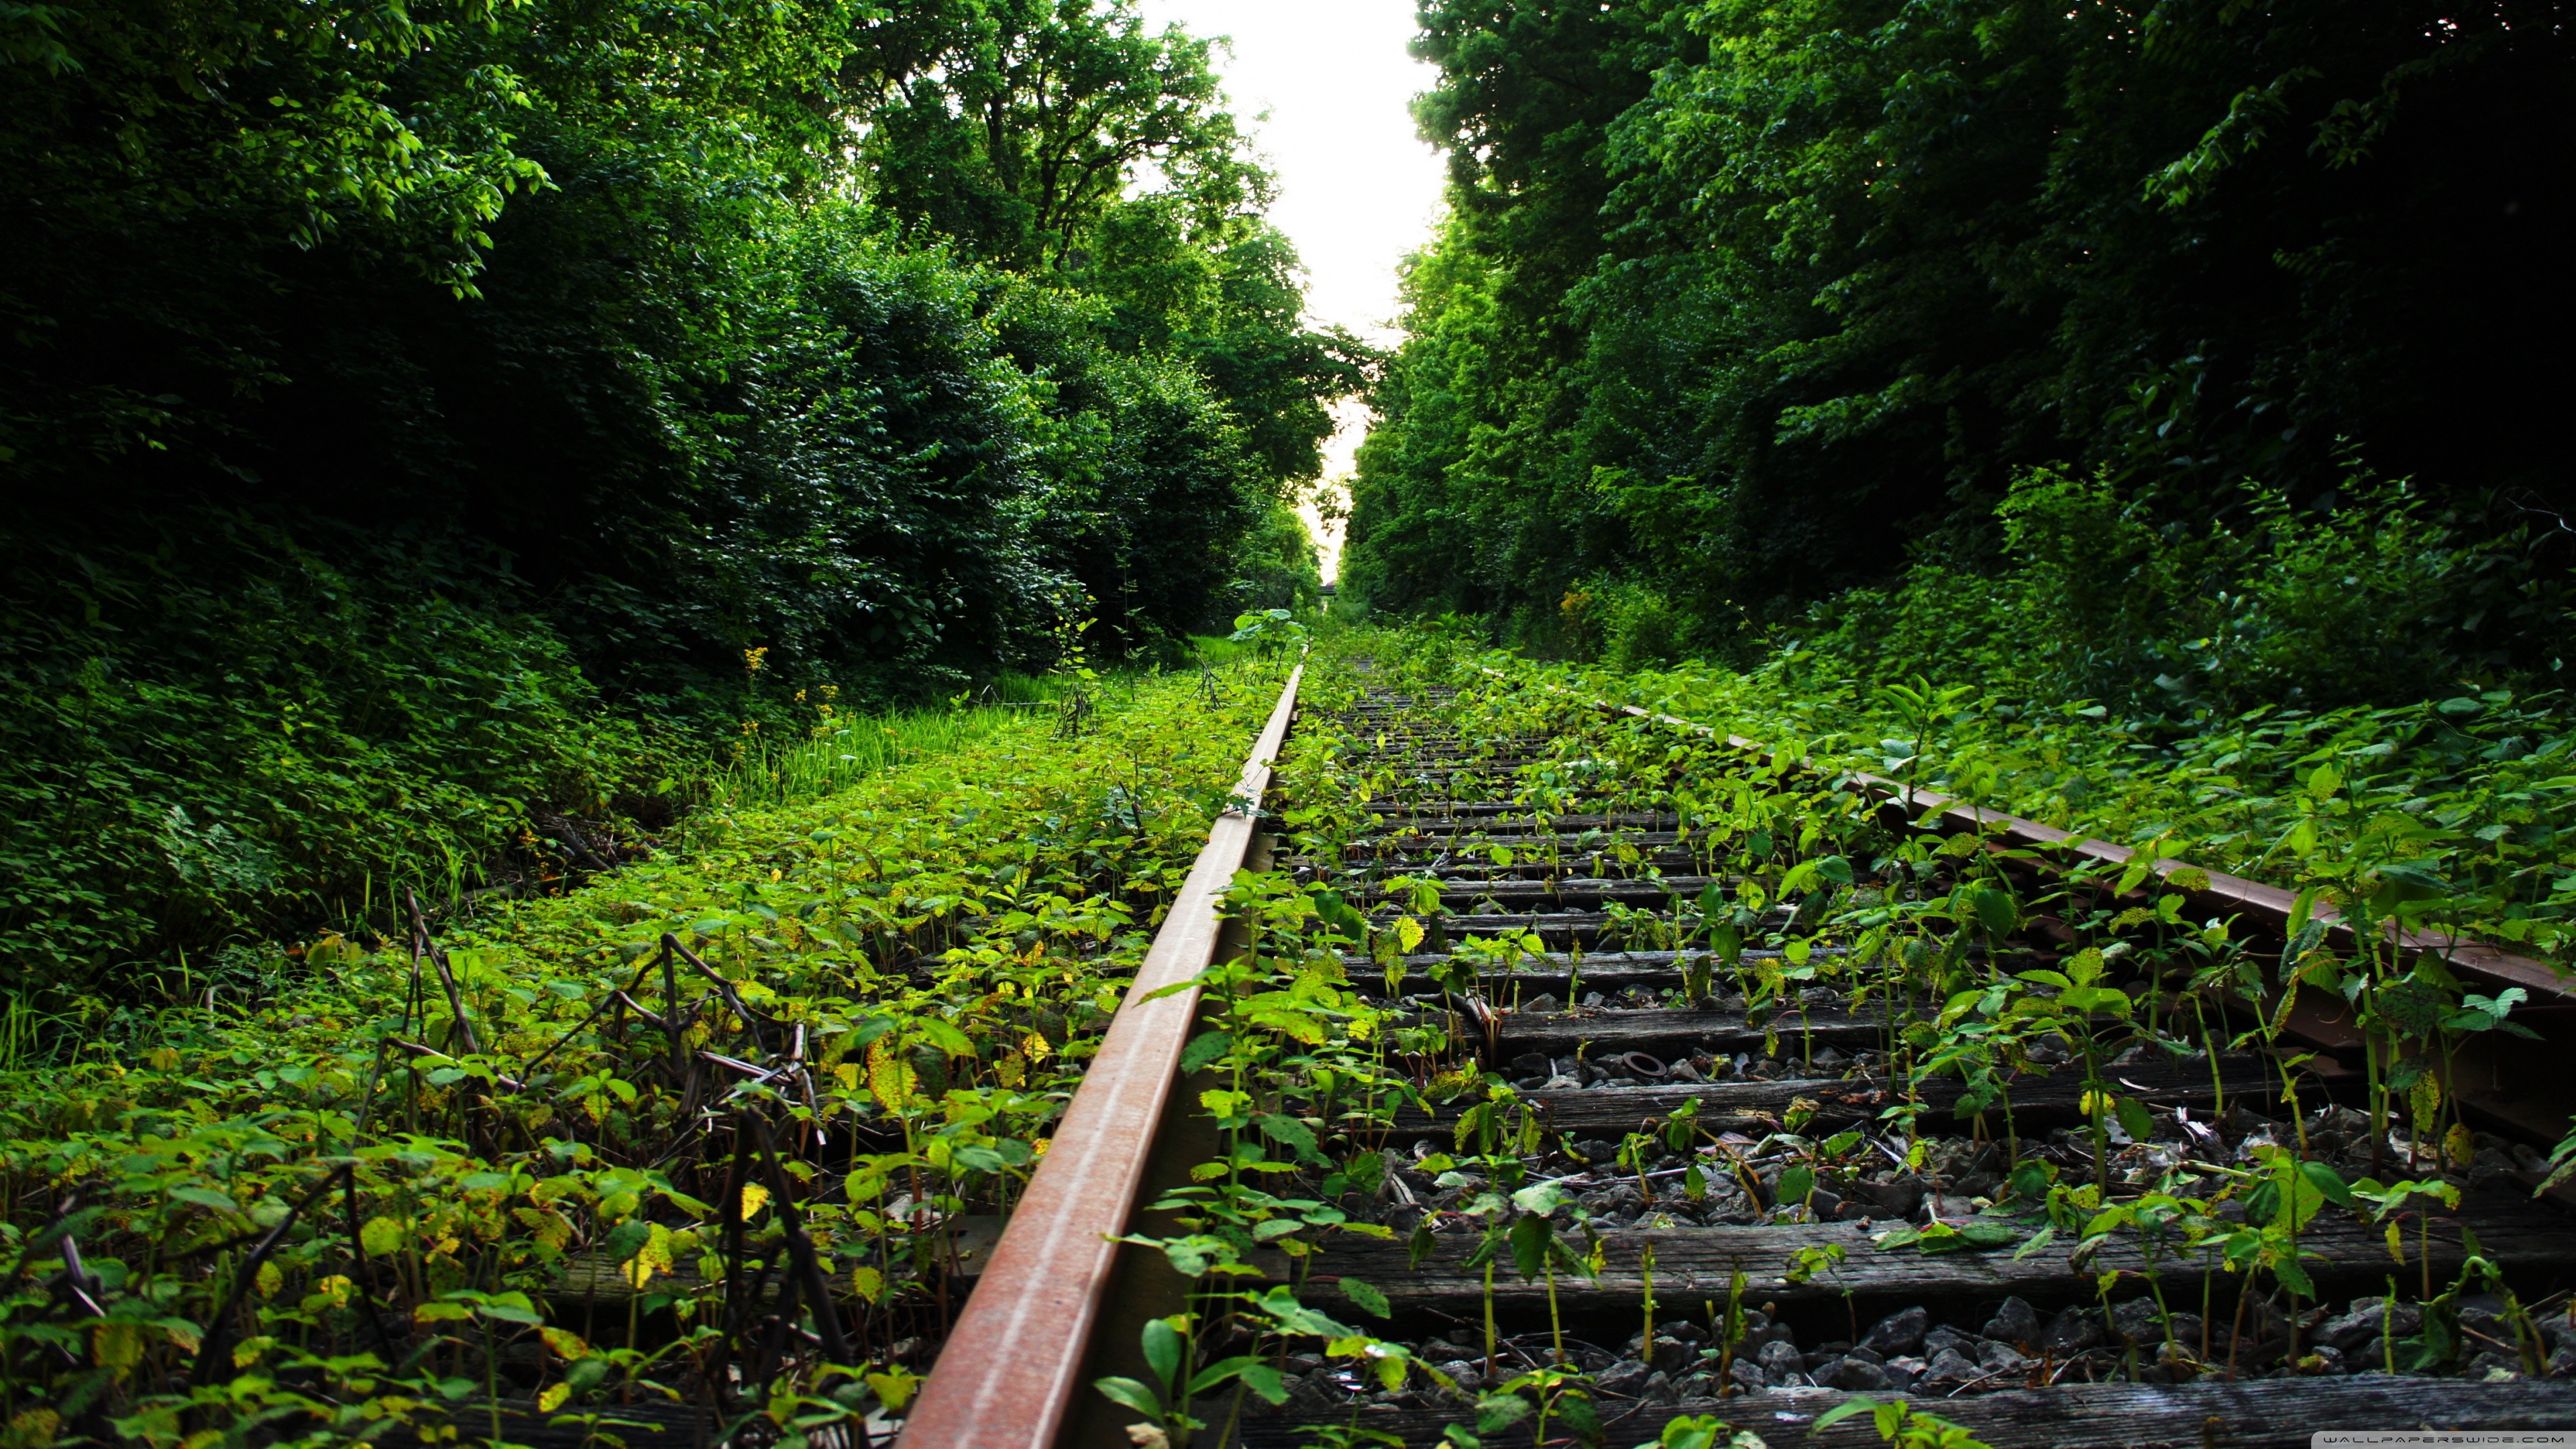 General 3840x2160 railway nature plants abandoned